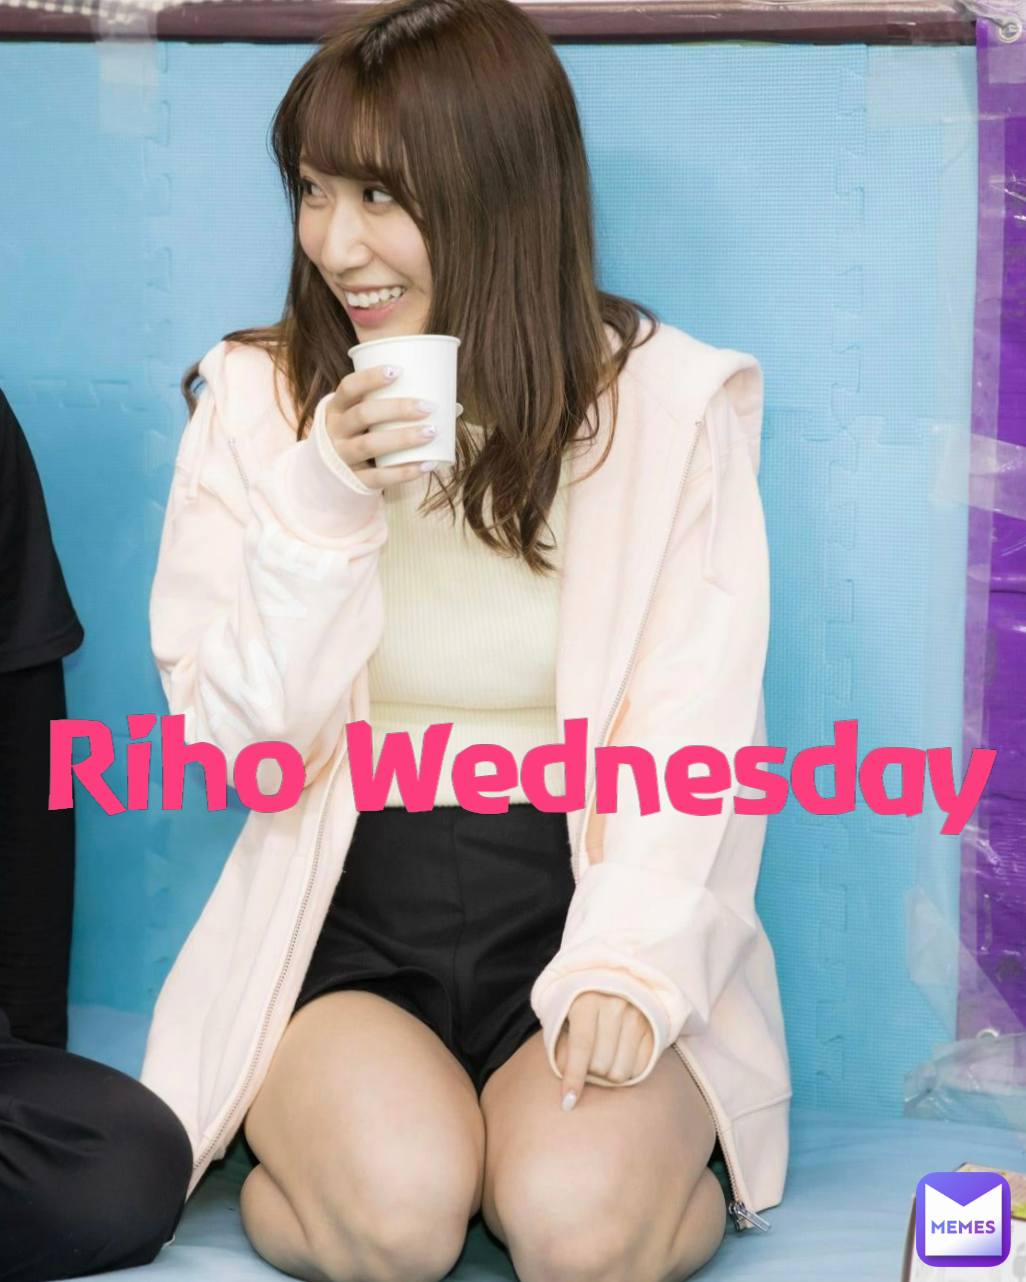 Riho Wednesday 